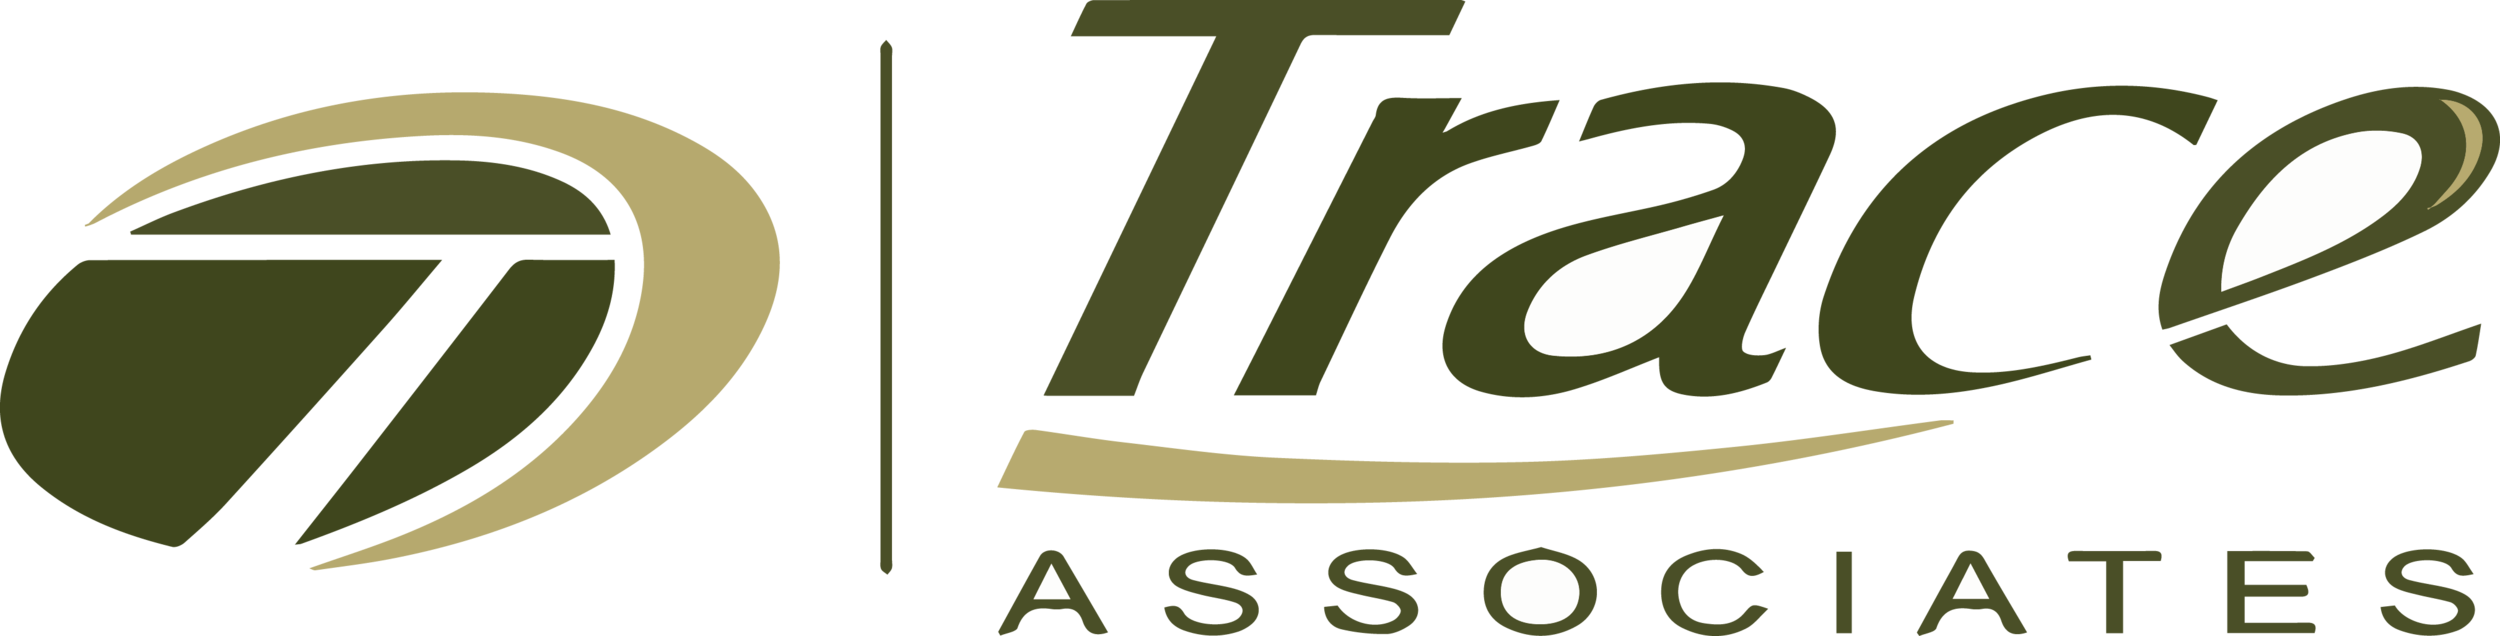 Trace Associates Logo.png